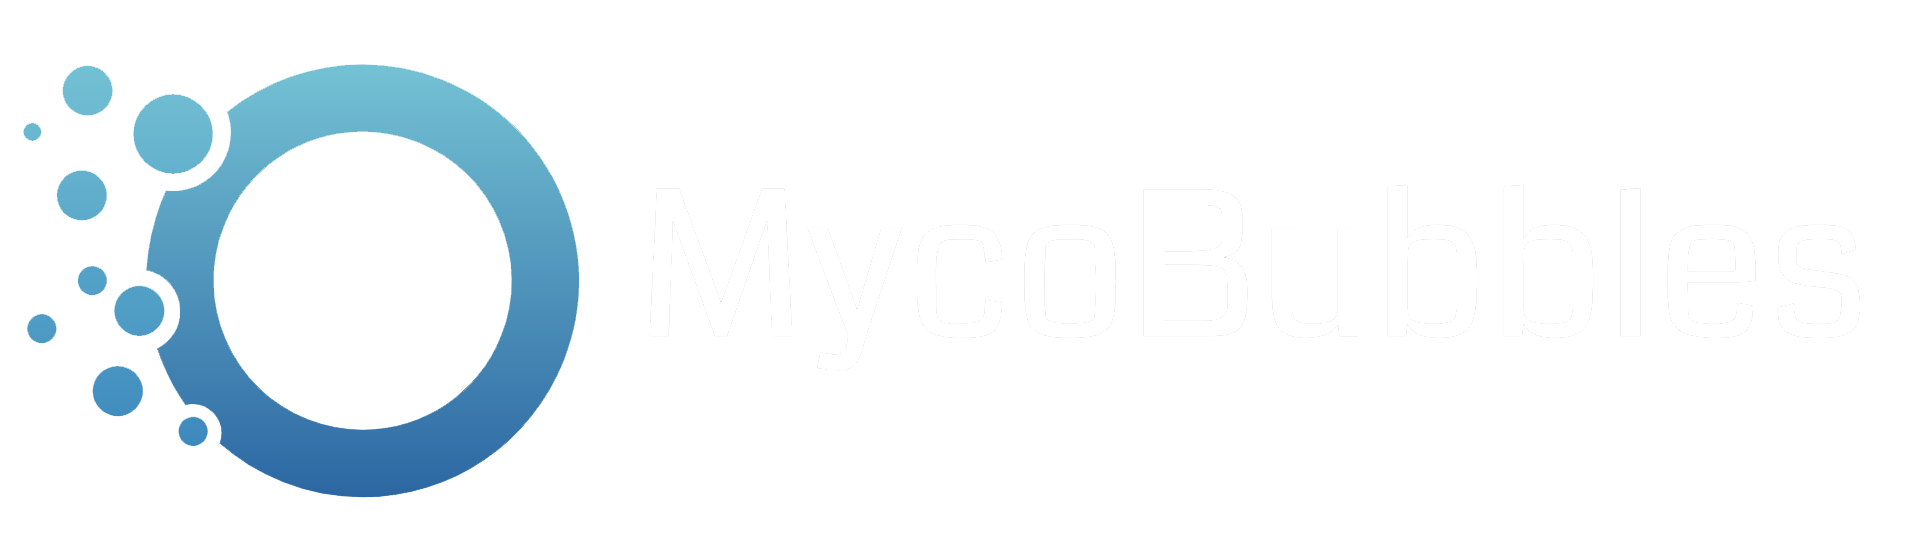 MycoBubbles